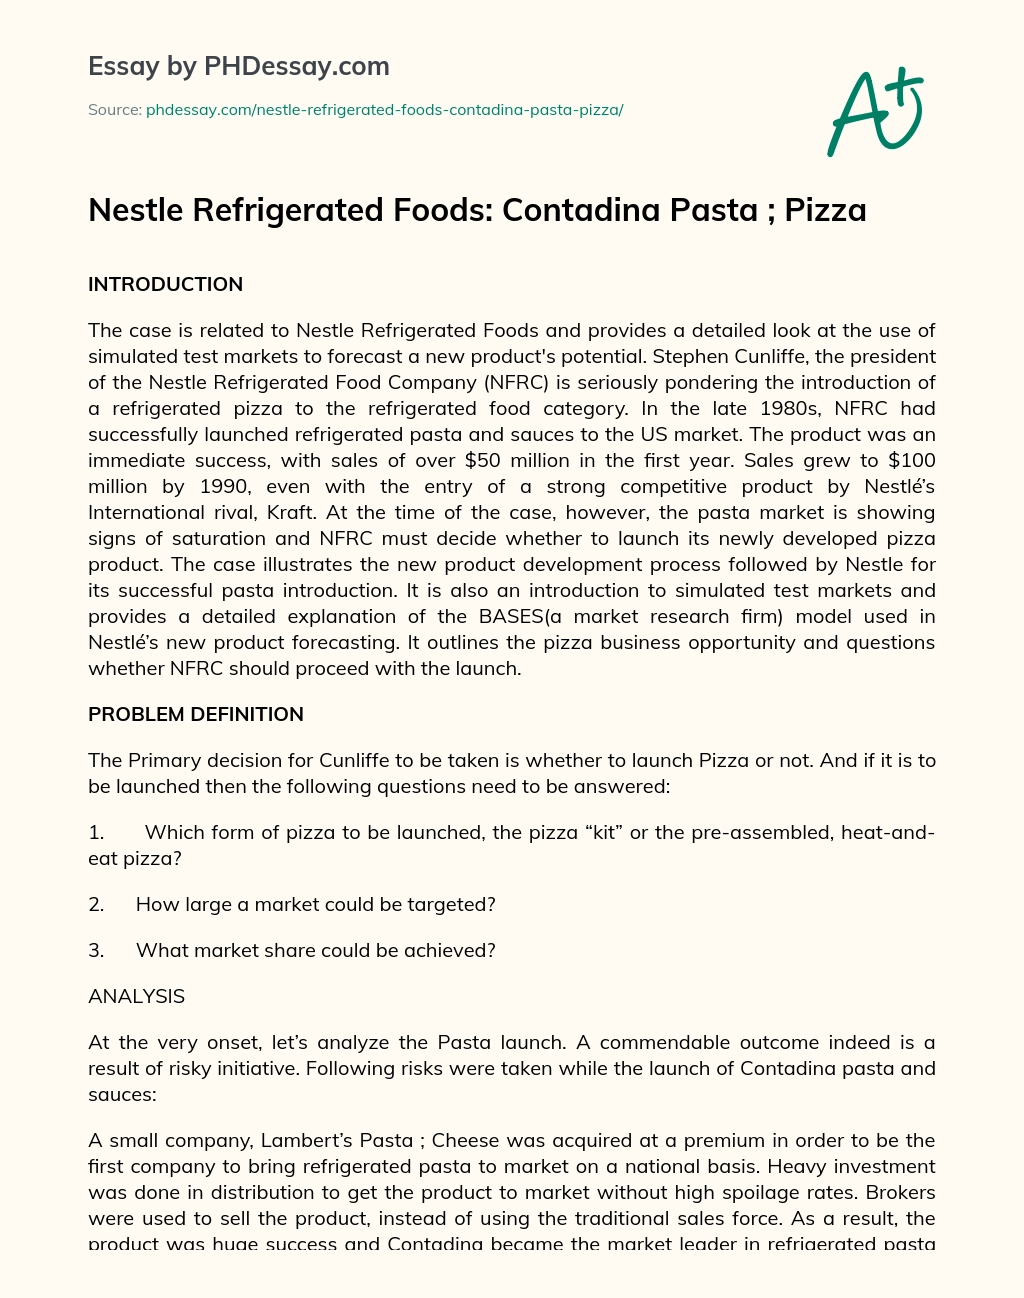 Nestle Refrigerated Foods: Contadina Pasta ; Pizza essay